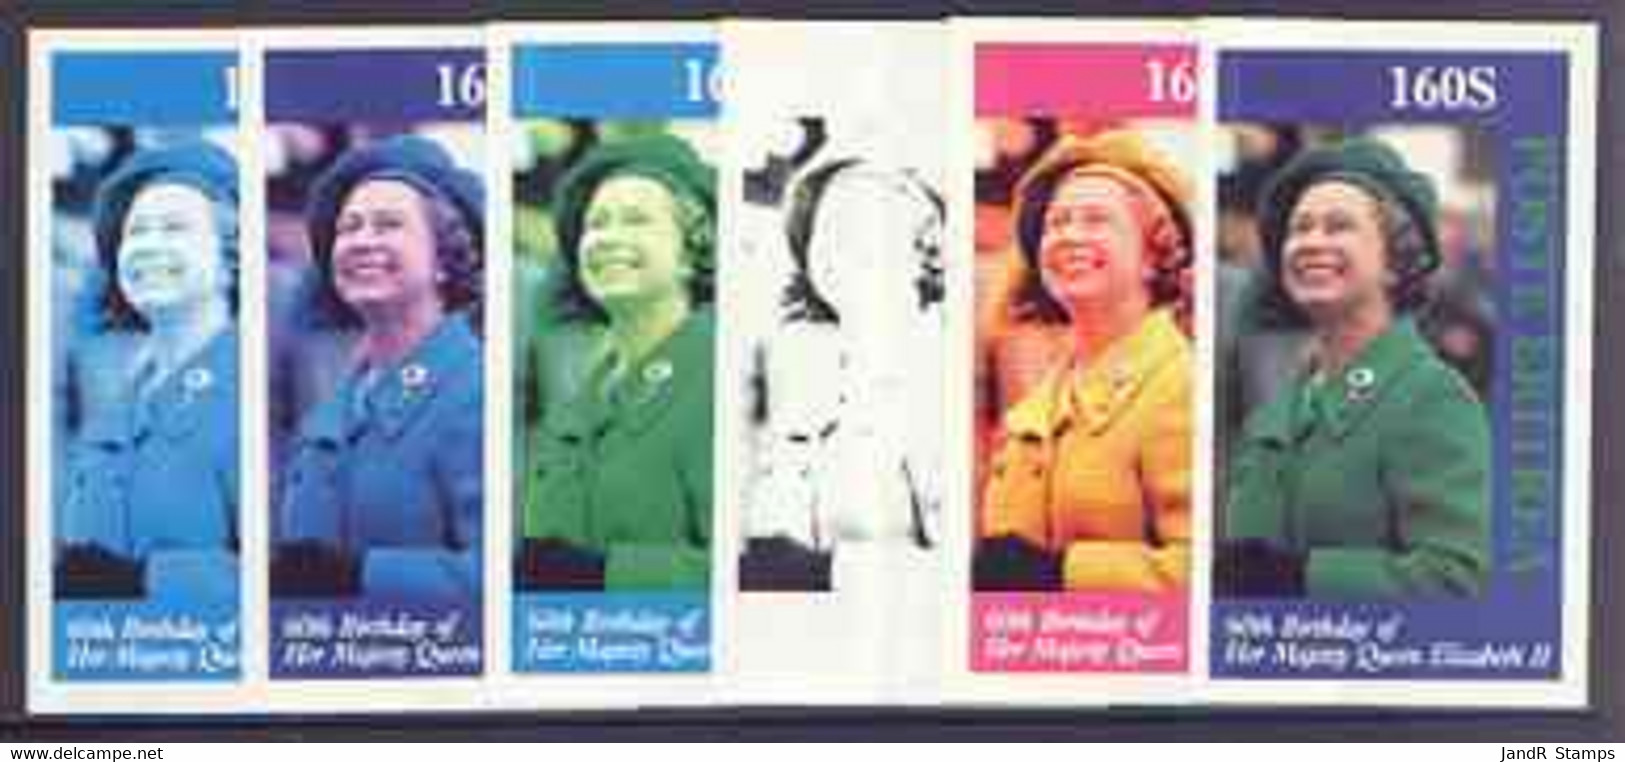 Eritrea 1986 Queen's 60th Birthday Imperf Souvenir Sheet (160s Value) The Set Of 6 Progressive Proofs Comprising Single - Erythrée